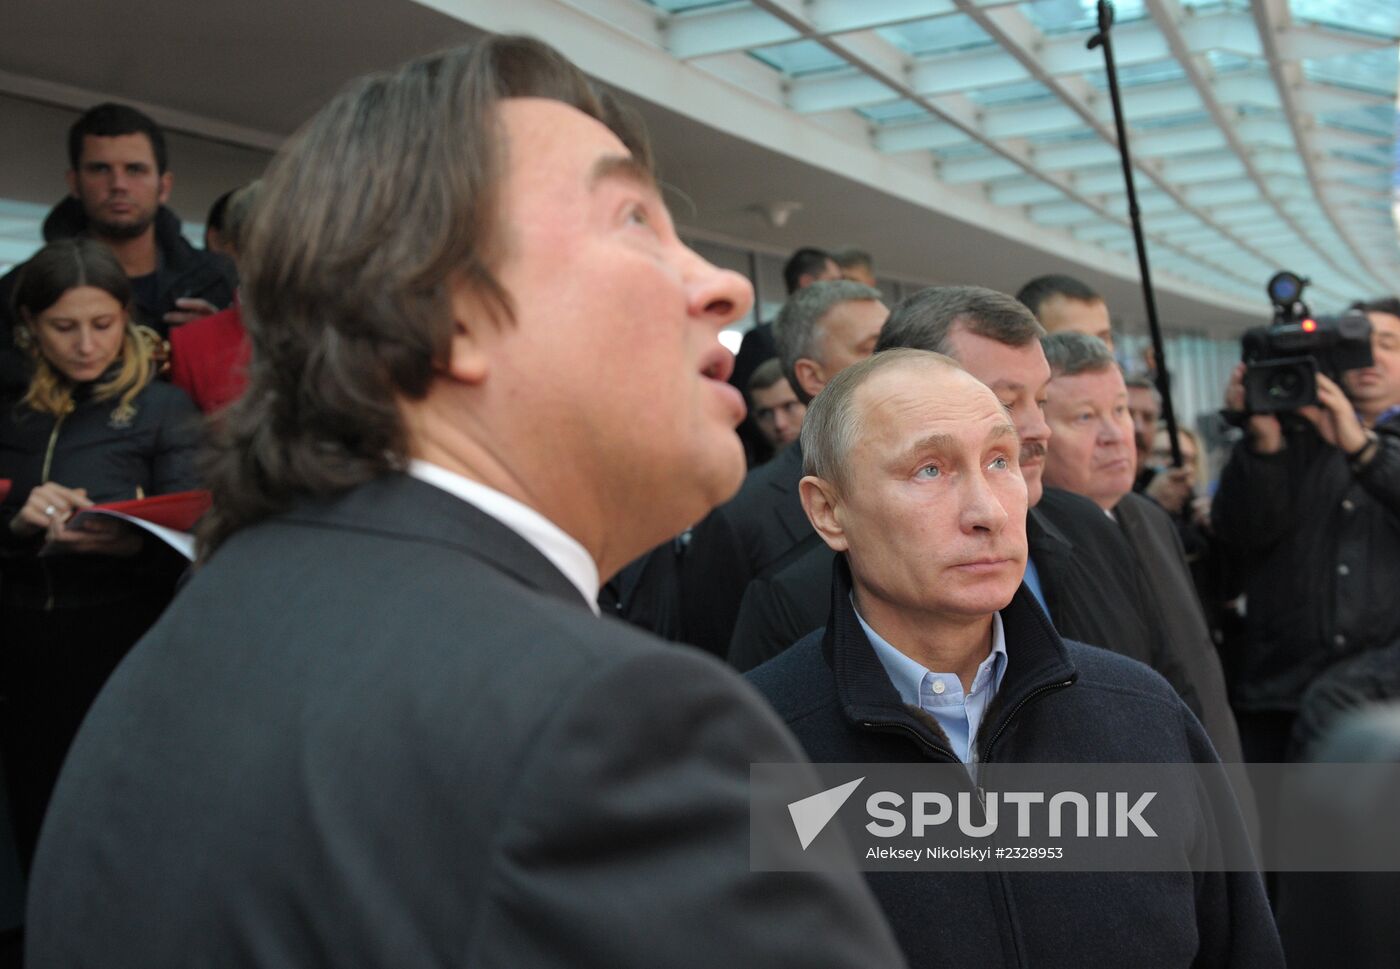 Vladimir Putin inspects Olympic facilities in Sochi